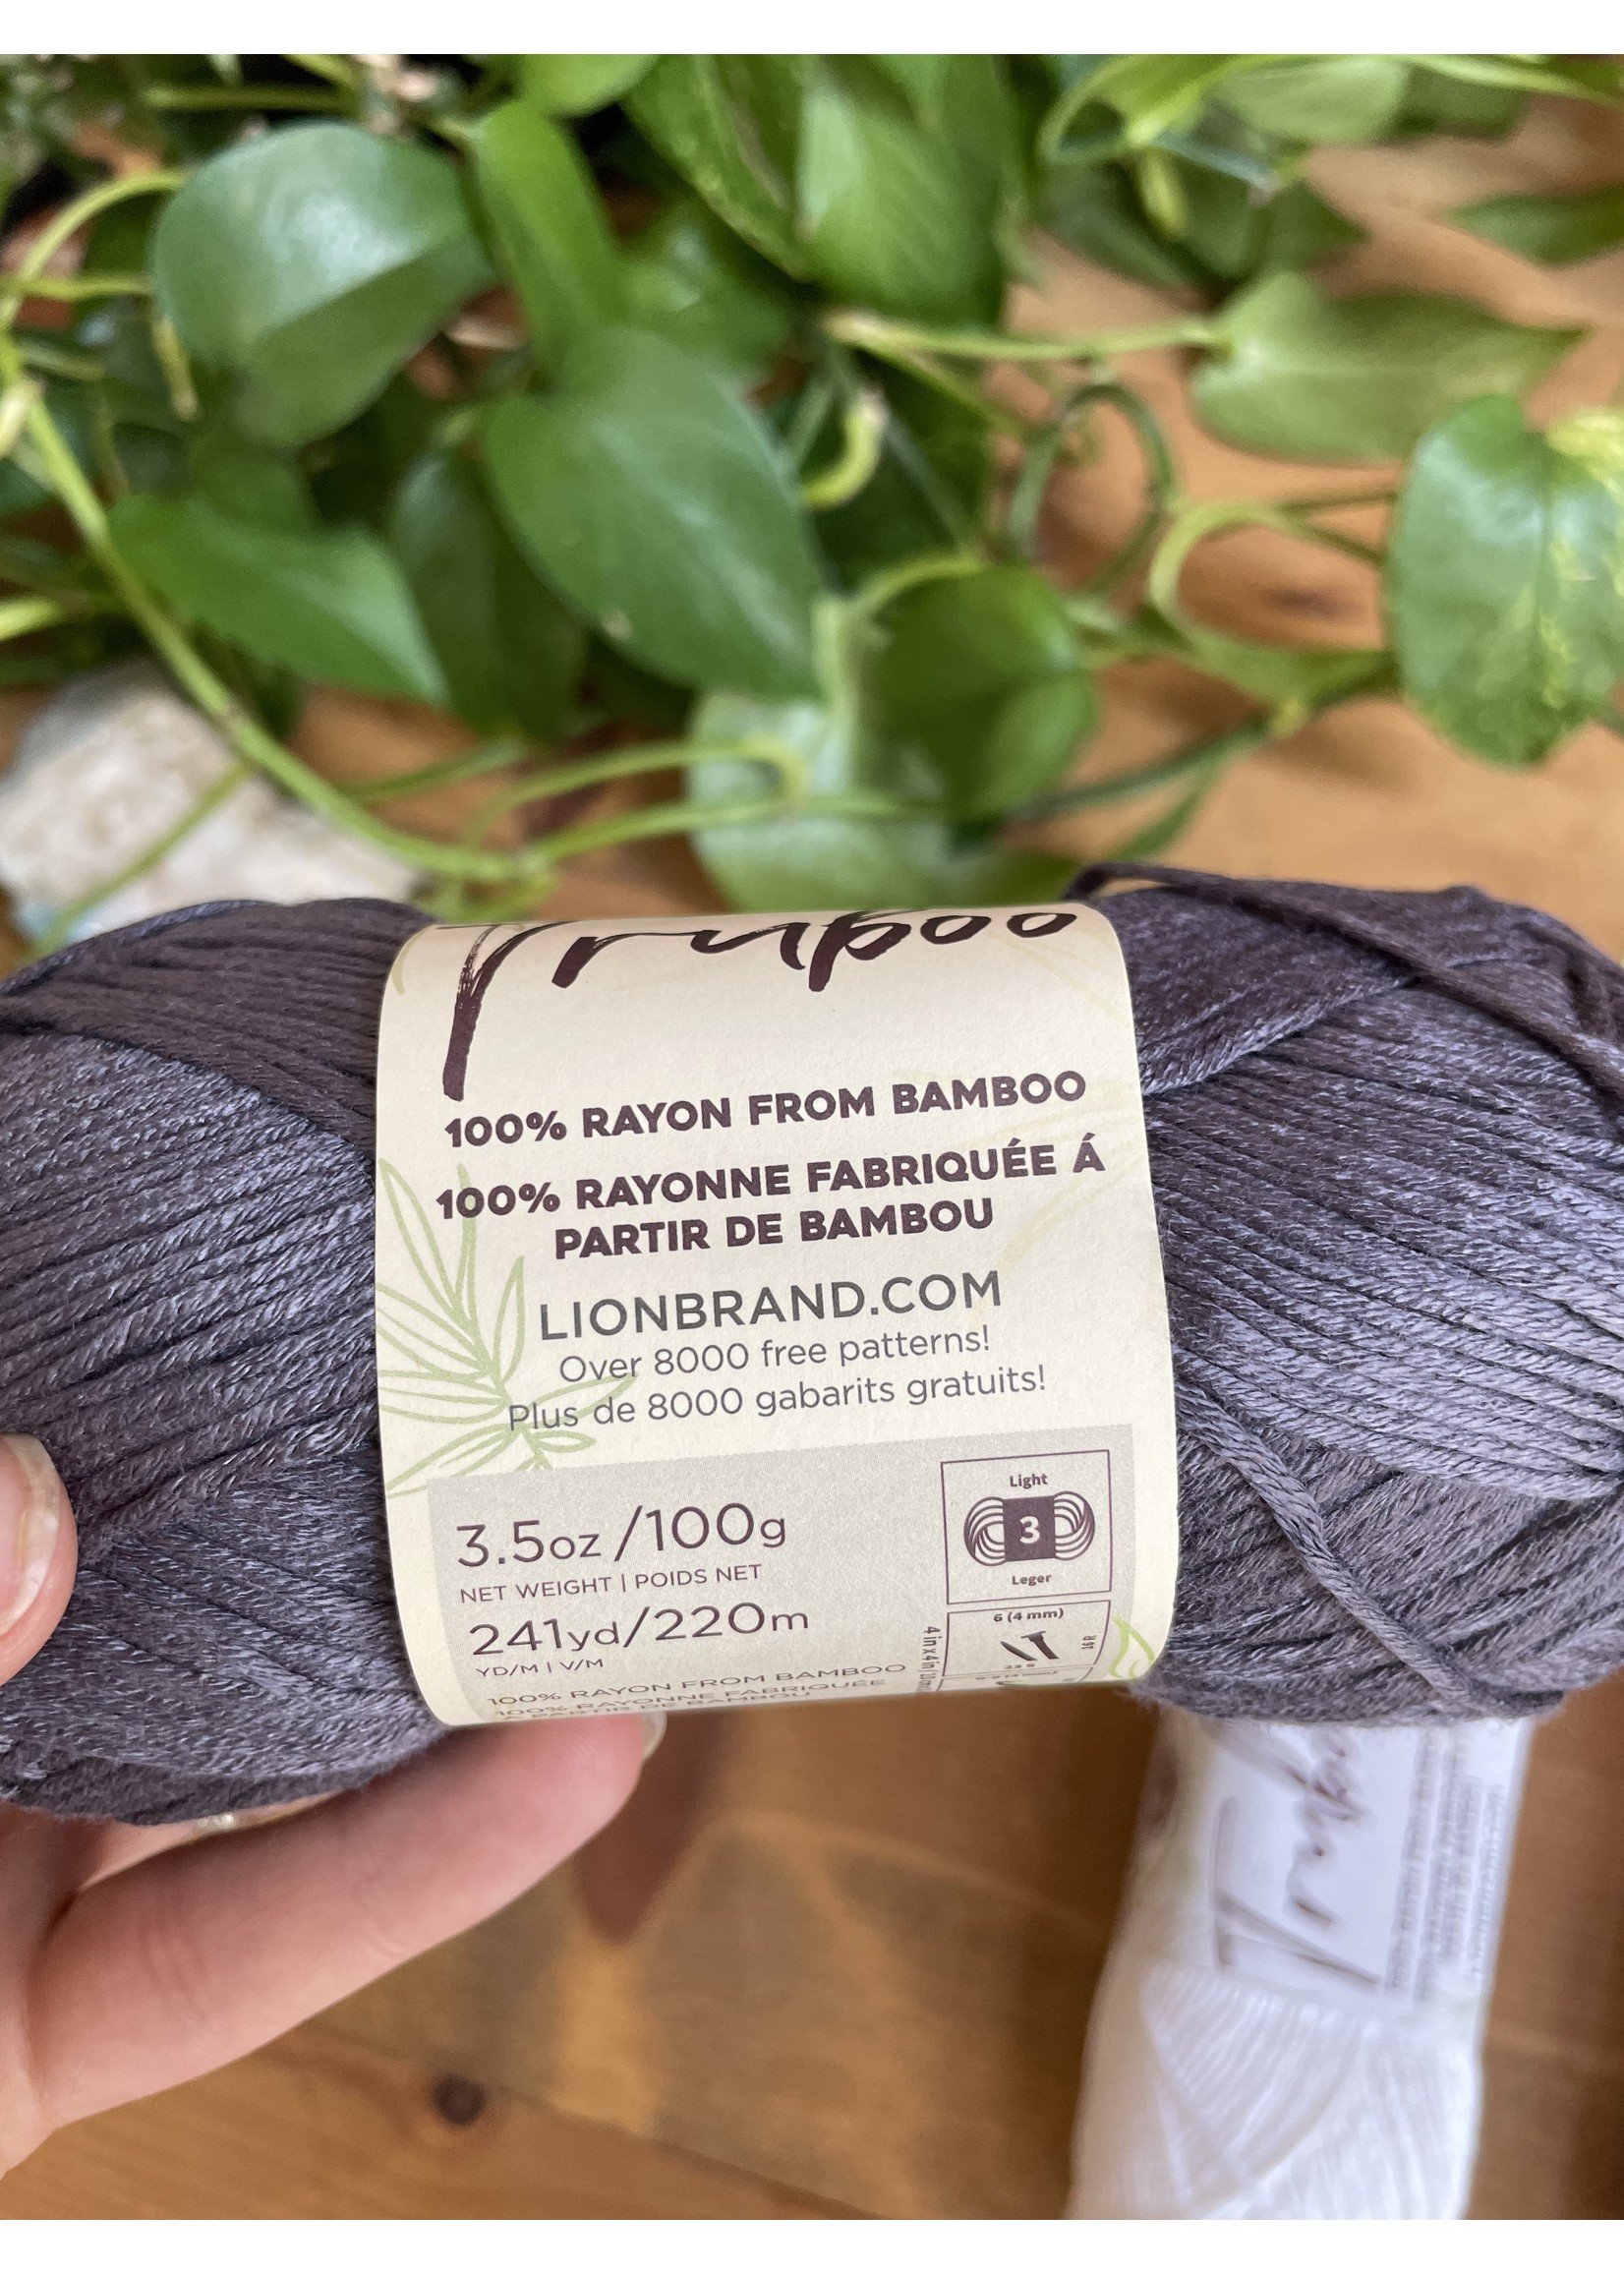 Truboo Lion Brand Yarn